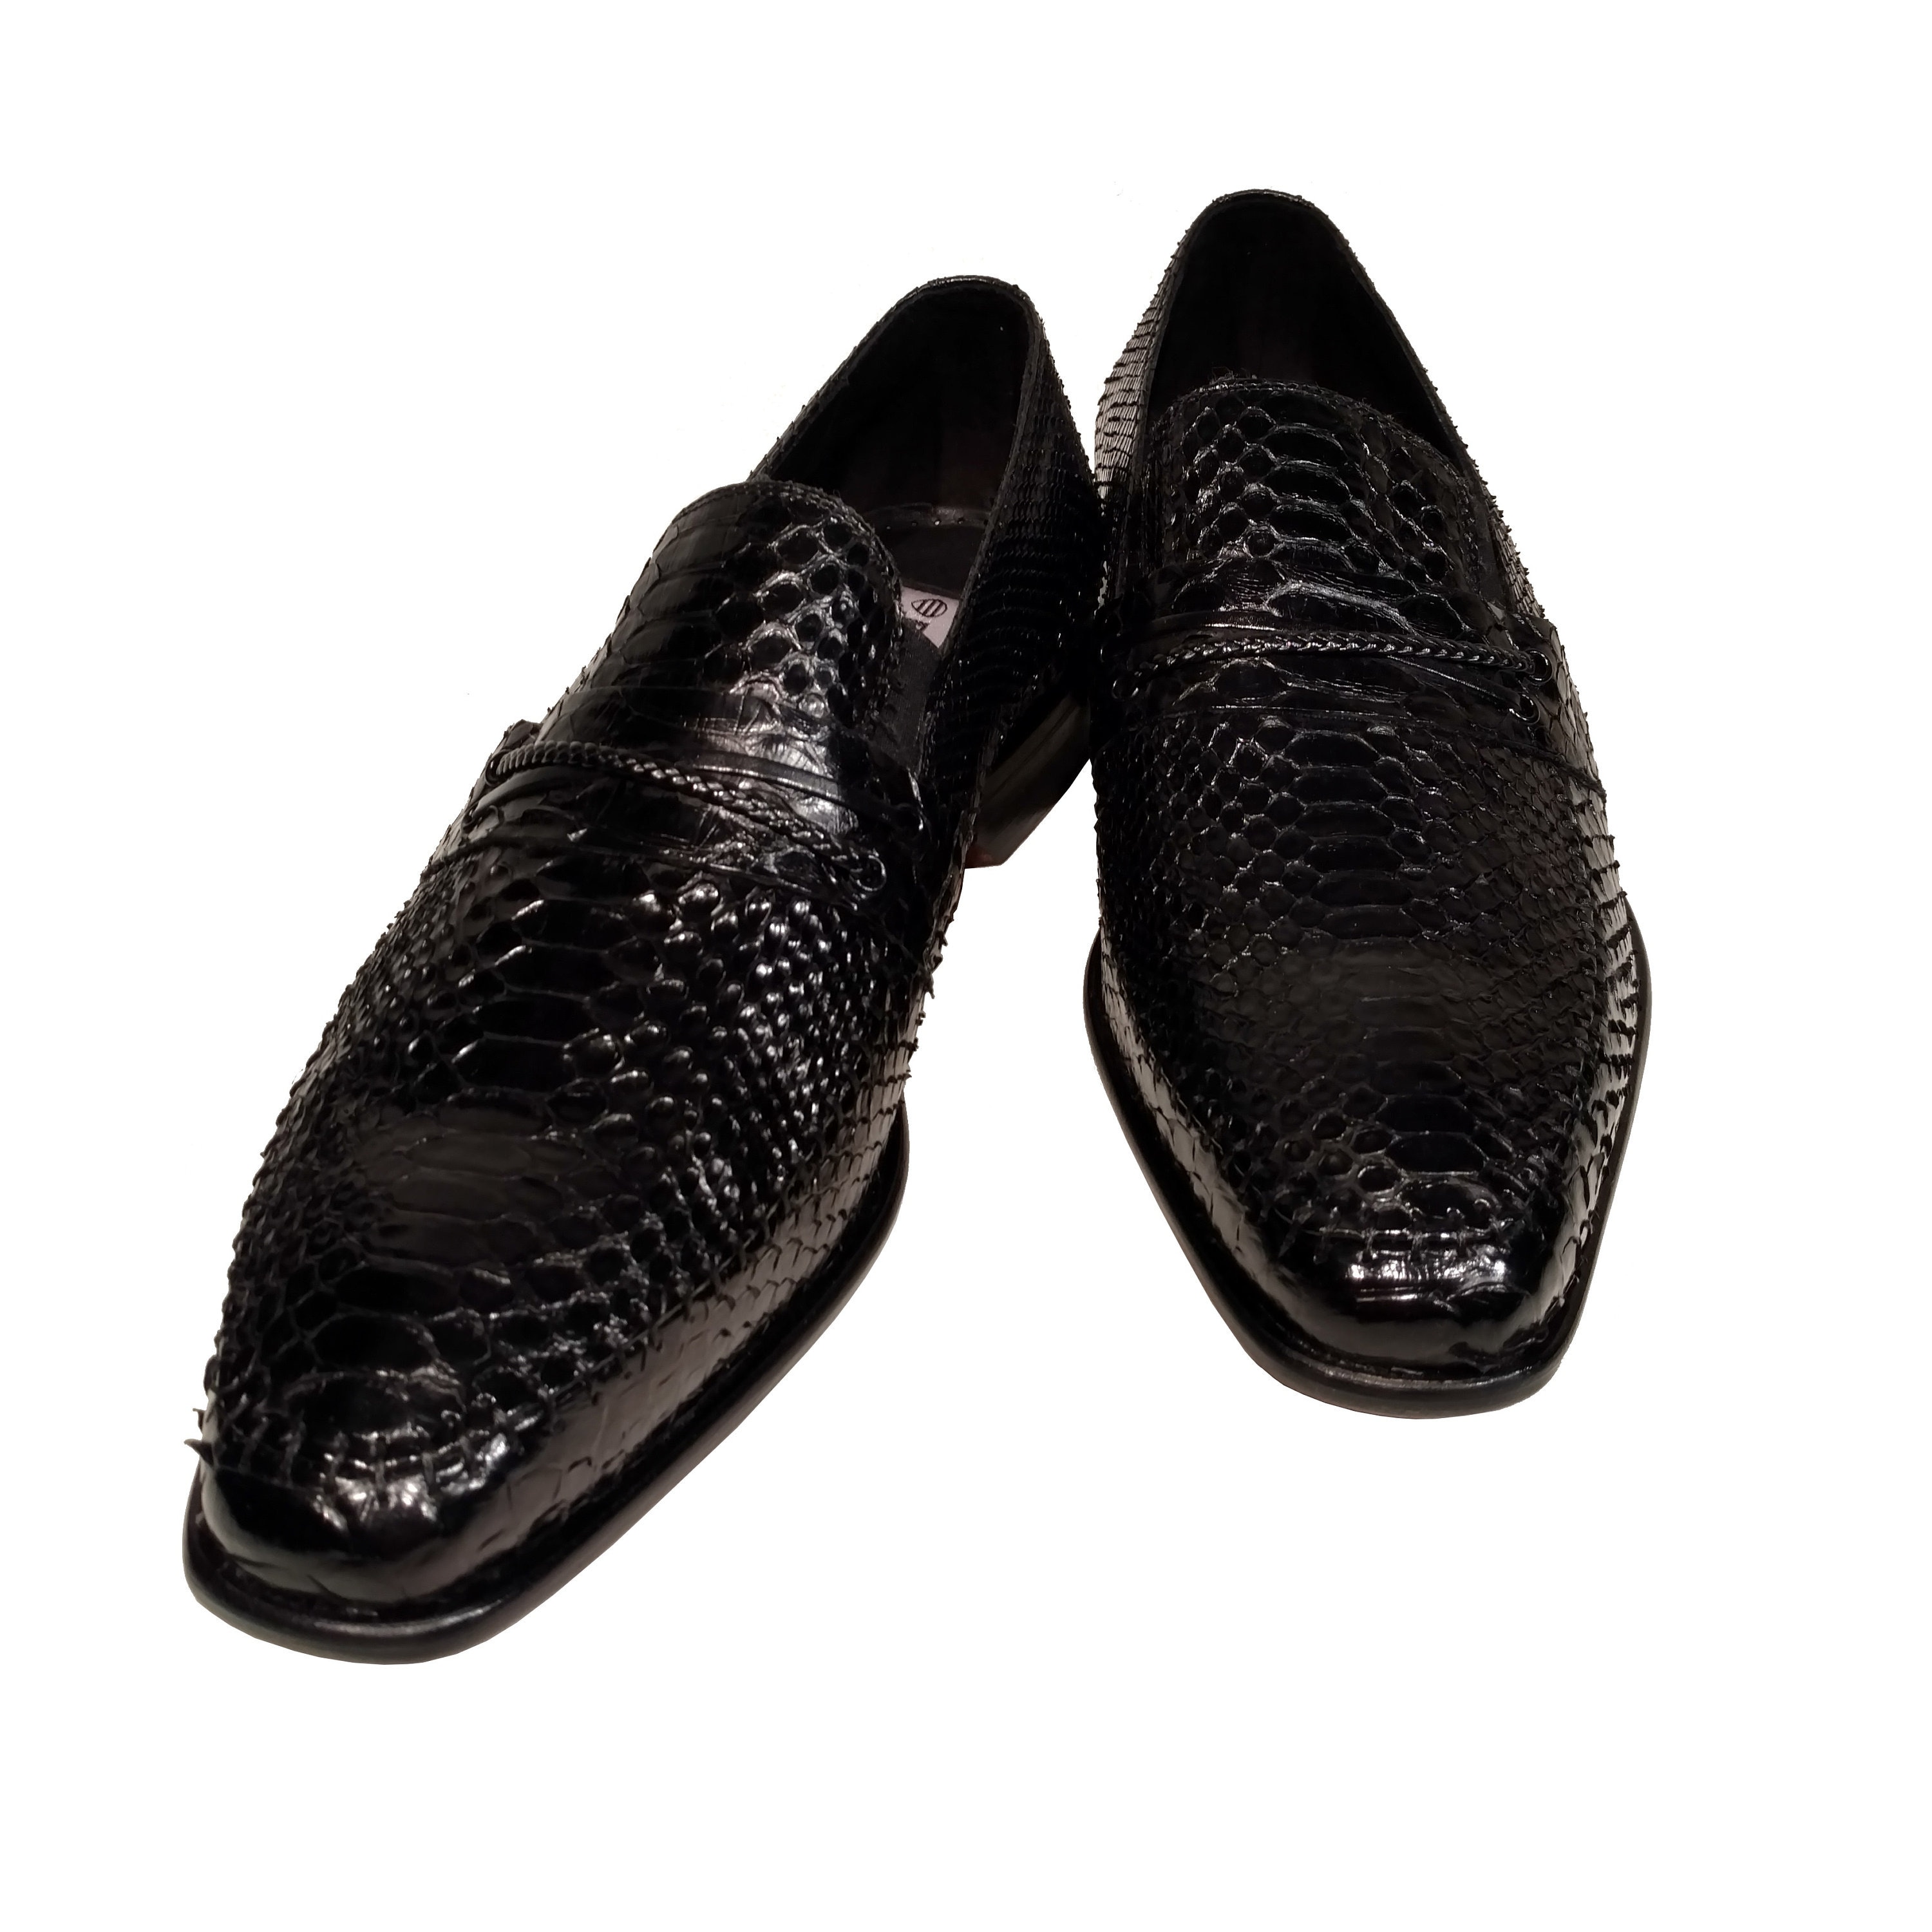 Schoenen Herenschoenen Loafers & Instappers Python Snakeskin mannen Ronaldo massief bruin Italiaans leder loafer jurk schoenen 